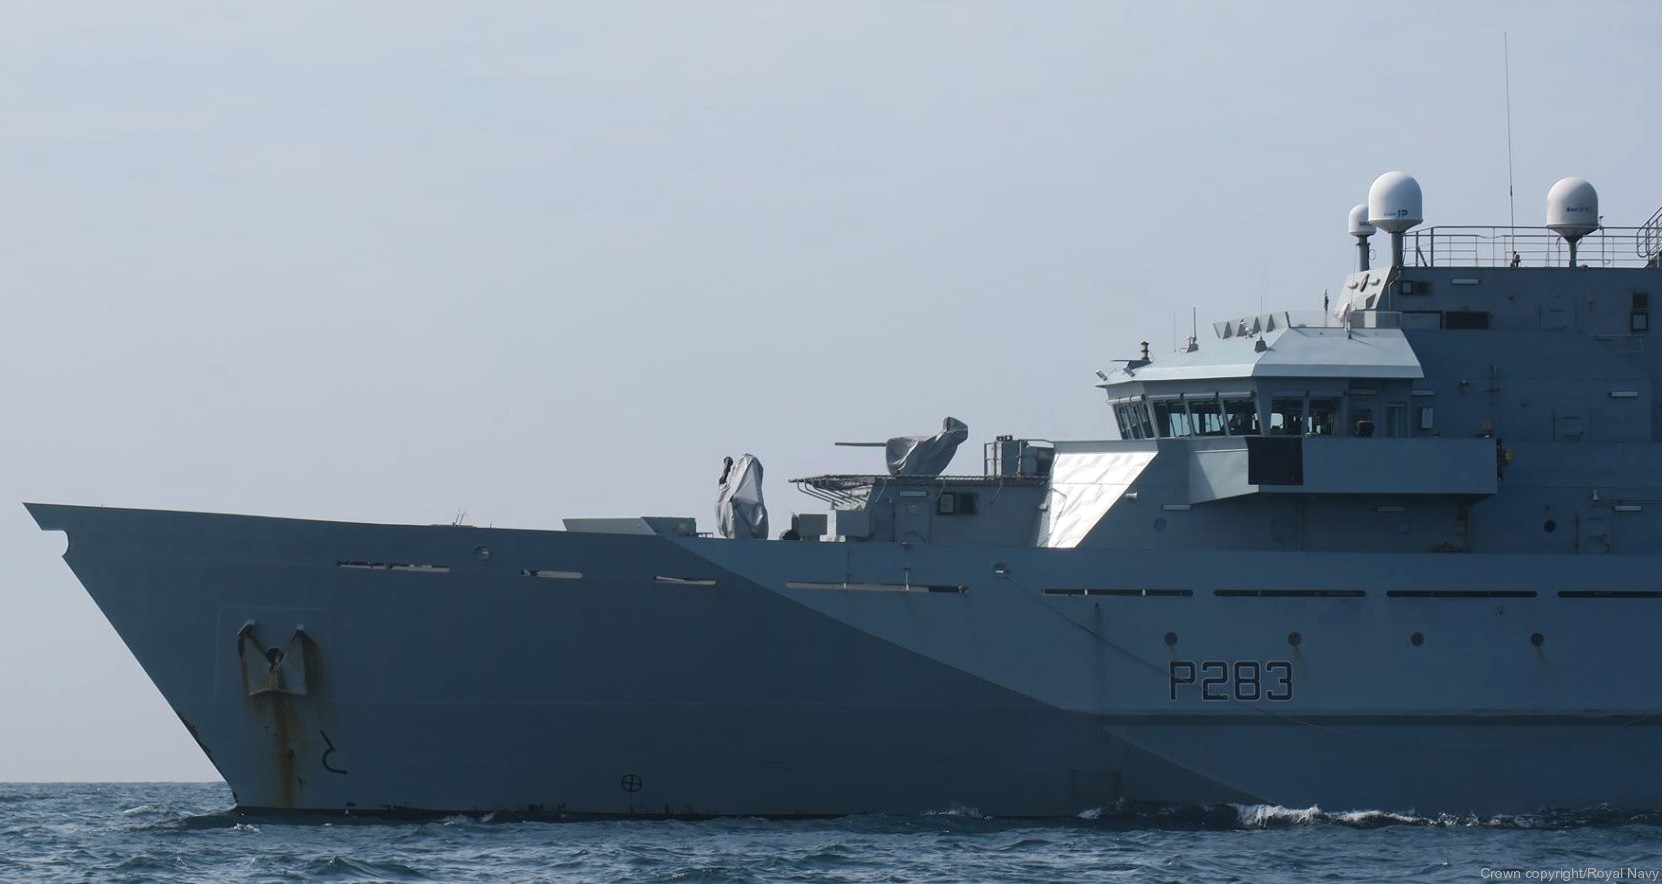 p-283 hms mersey river class offshore patrol vessel opv royal navy 27